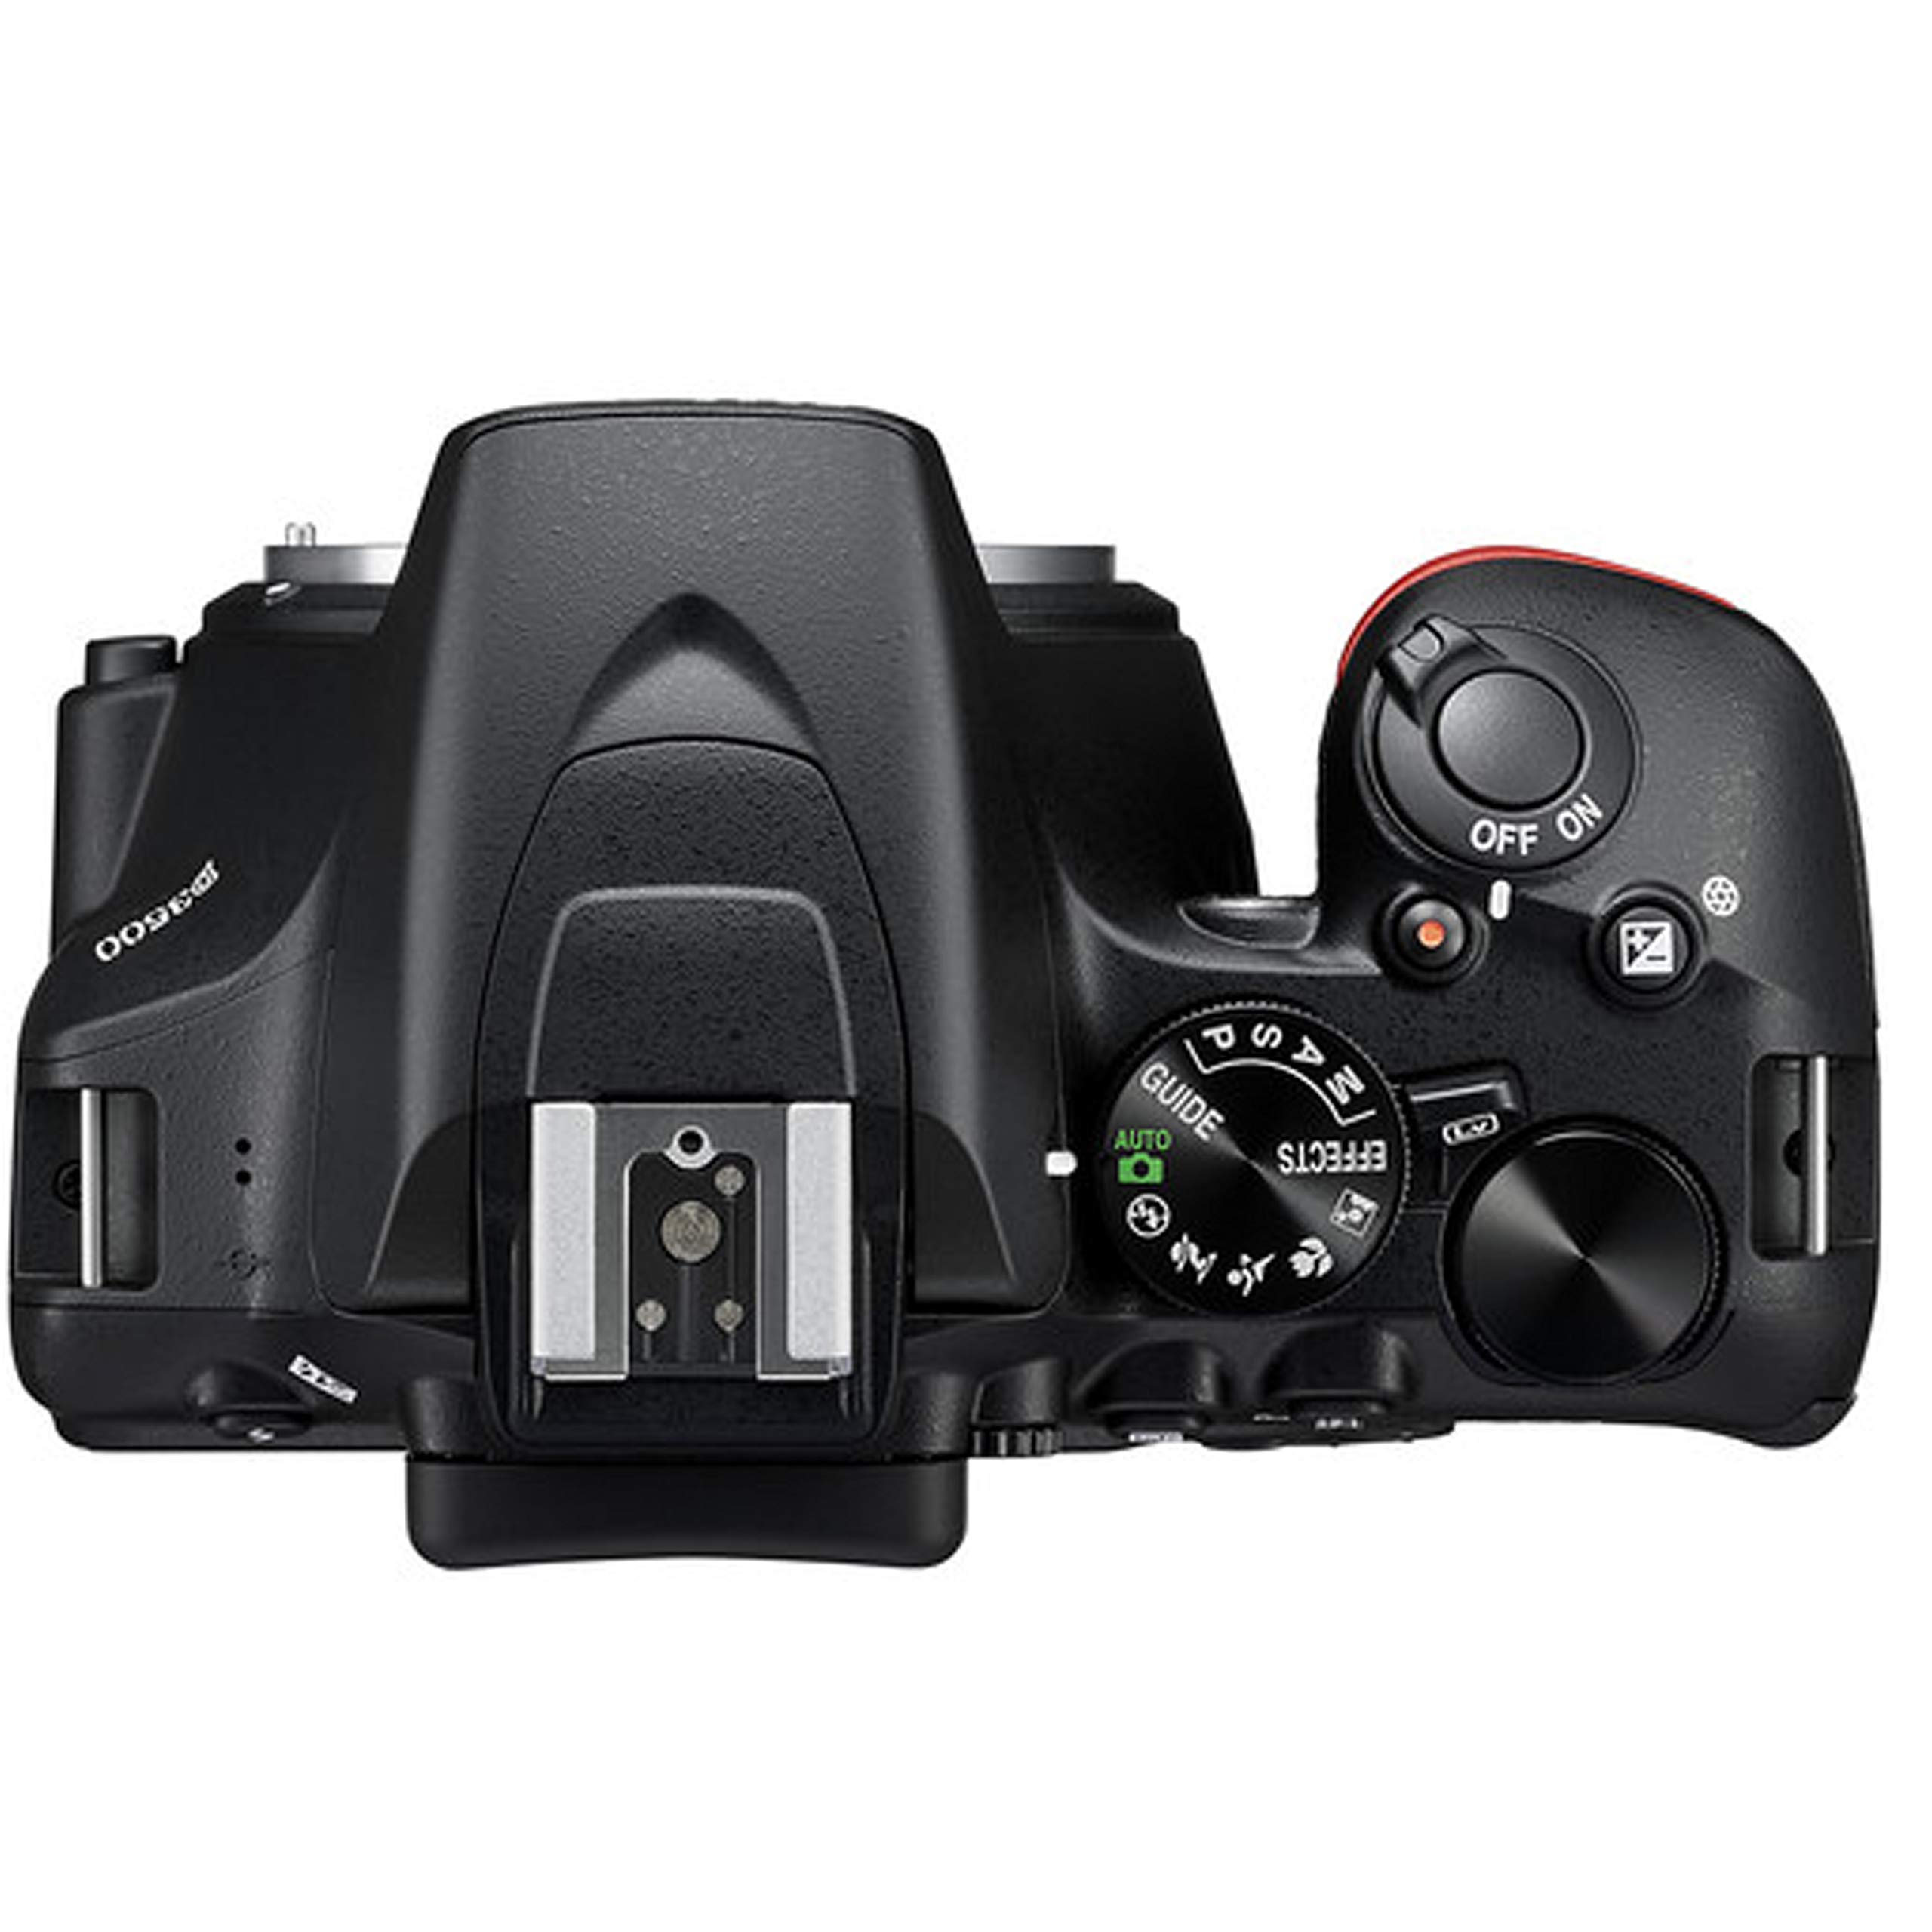 Nikon intl D3500 DSLR Camera Bundle with 18-55mm VR Lens - Built-in Wi-Fi-24.2 MP CMOS Sensor - -EXPEED 4 Image Processor and Full HD Videos64GB Memory(17pcs)